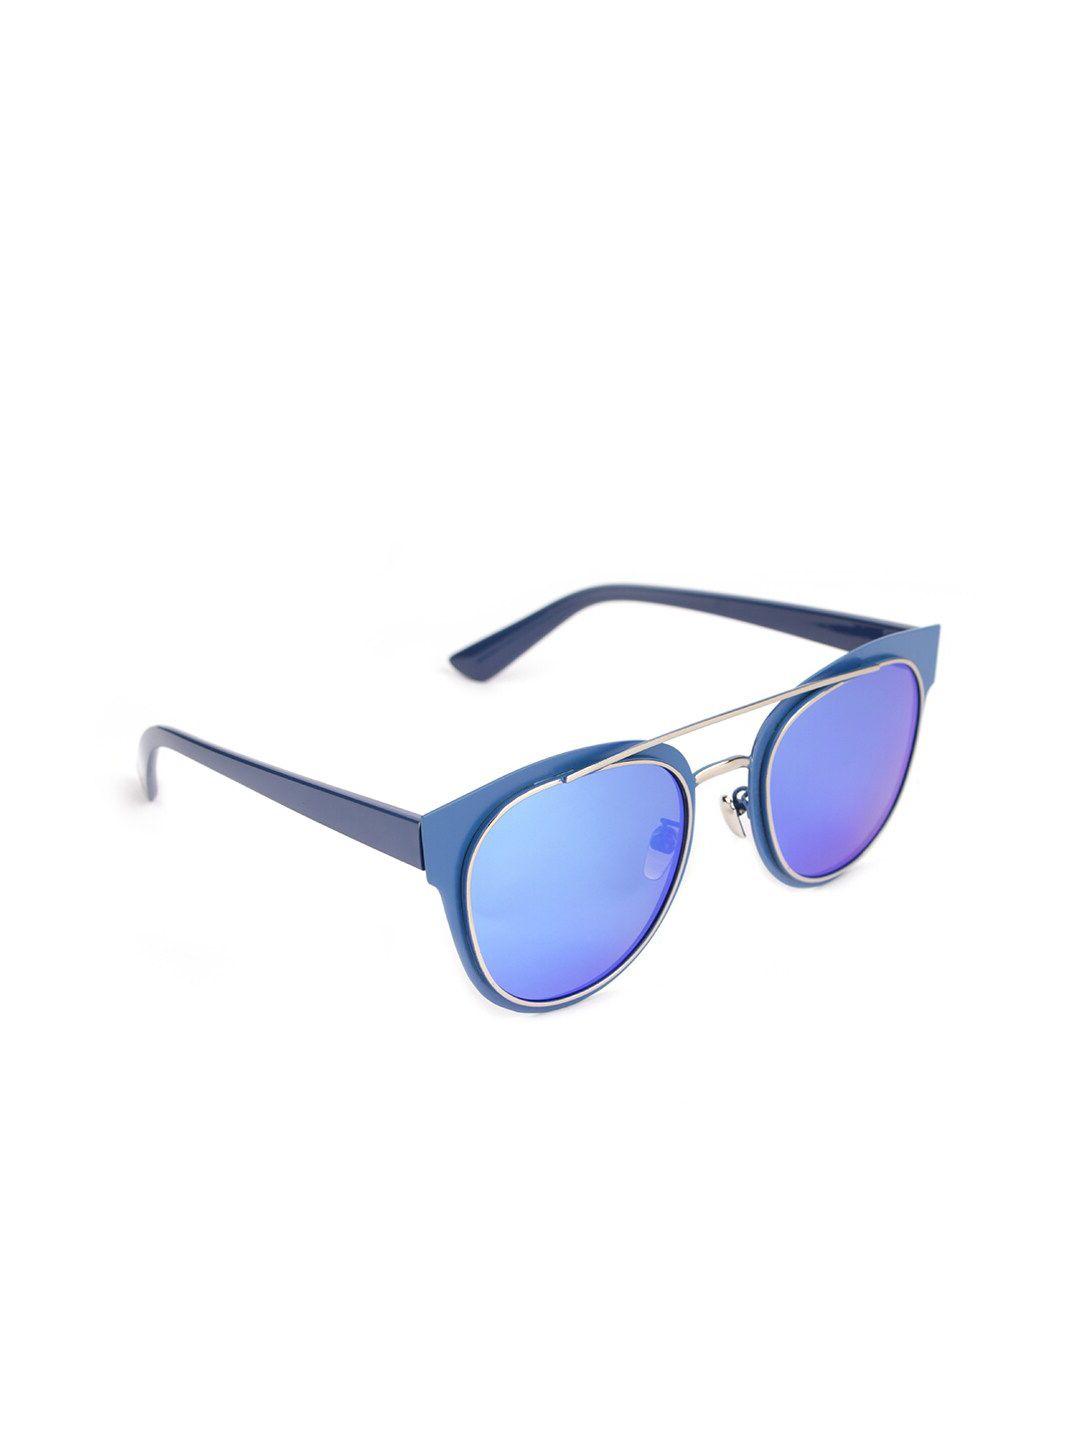 fuzoku unisex blue lens & blue oval sunglasses with uv protected lens